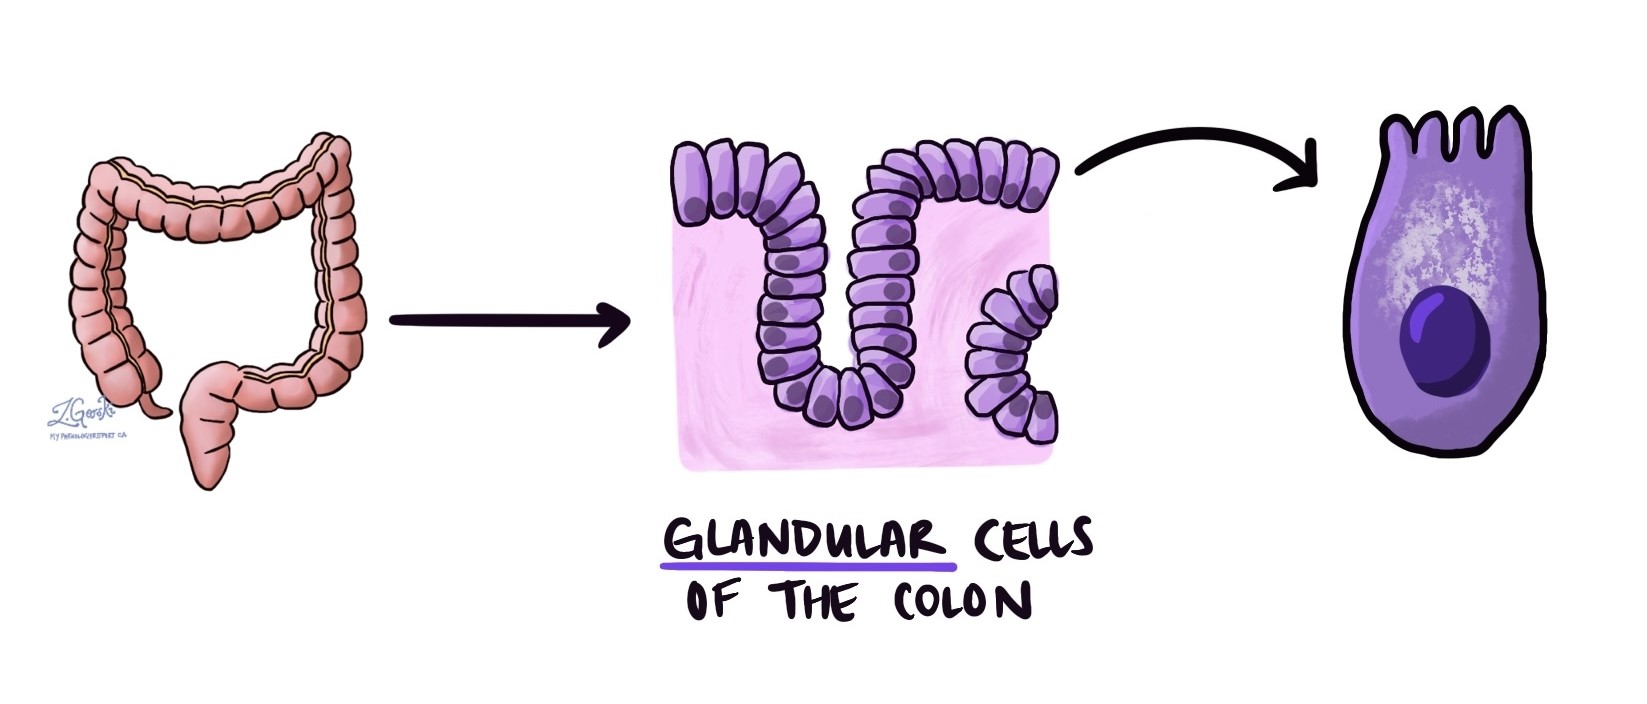 Glandular cells